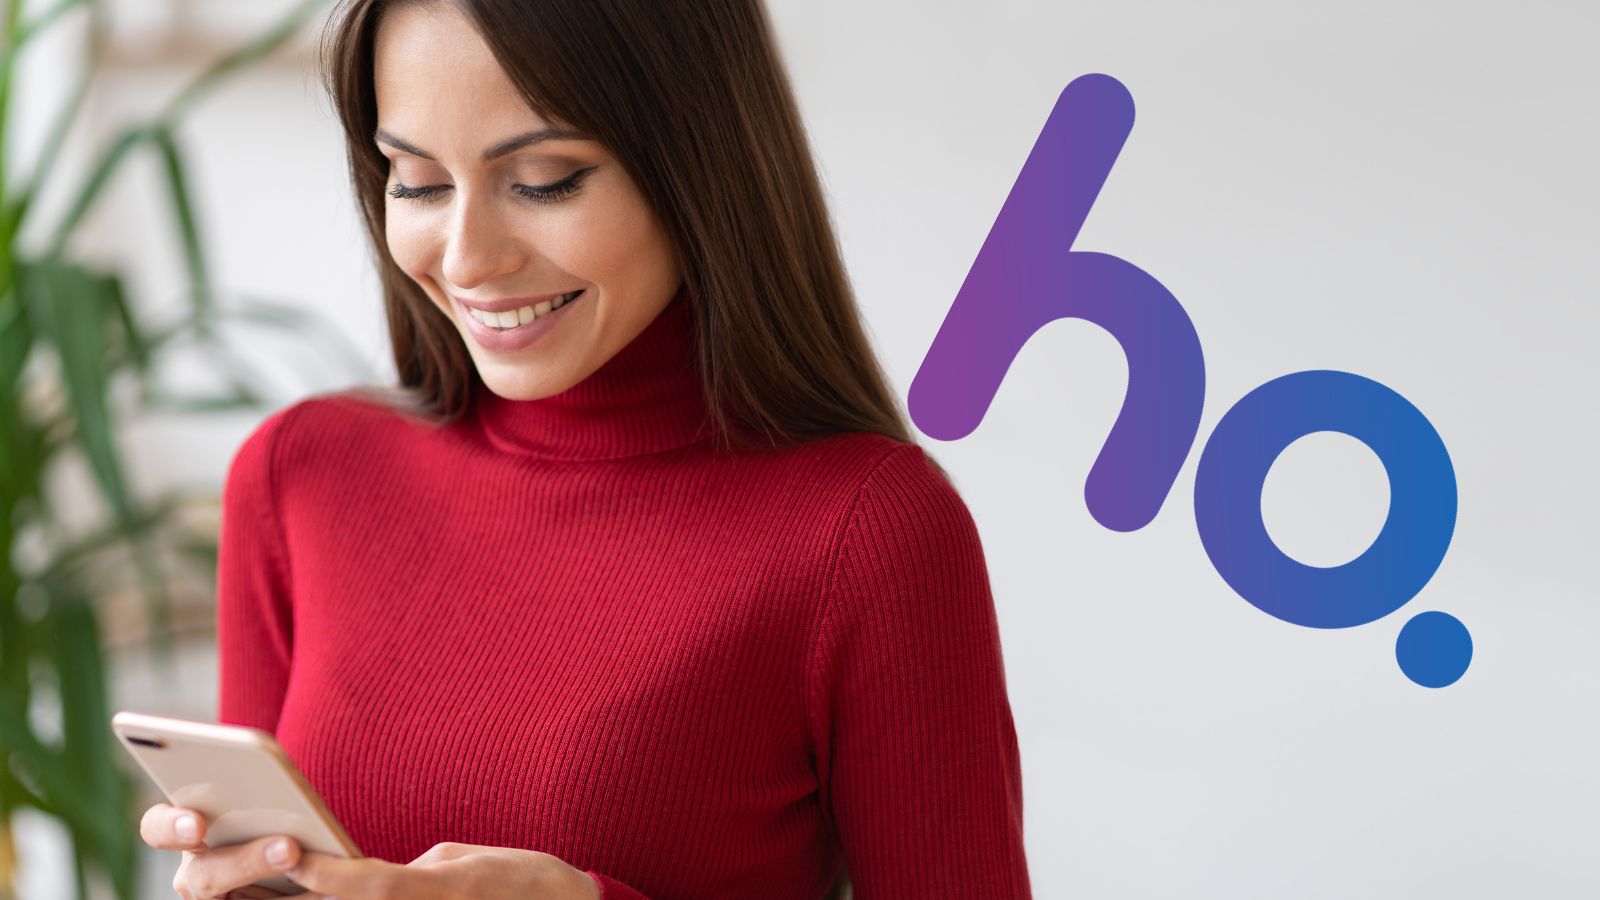 ho.Mobile, offerta da 5,99 euro e 100 giga al mese in 4G